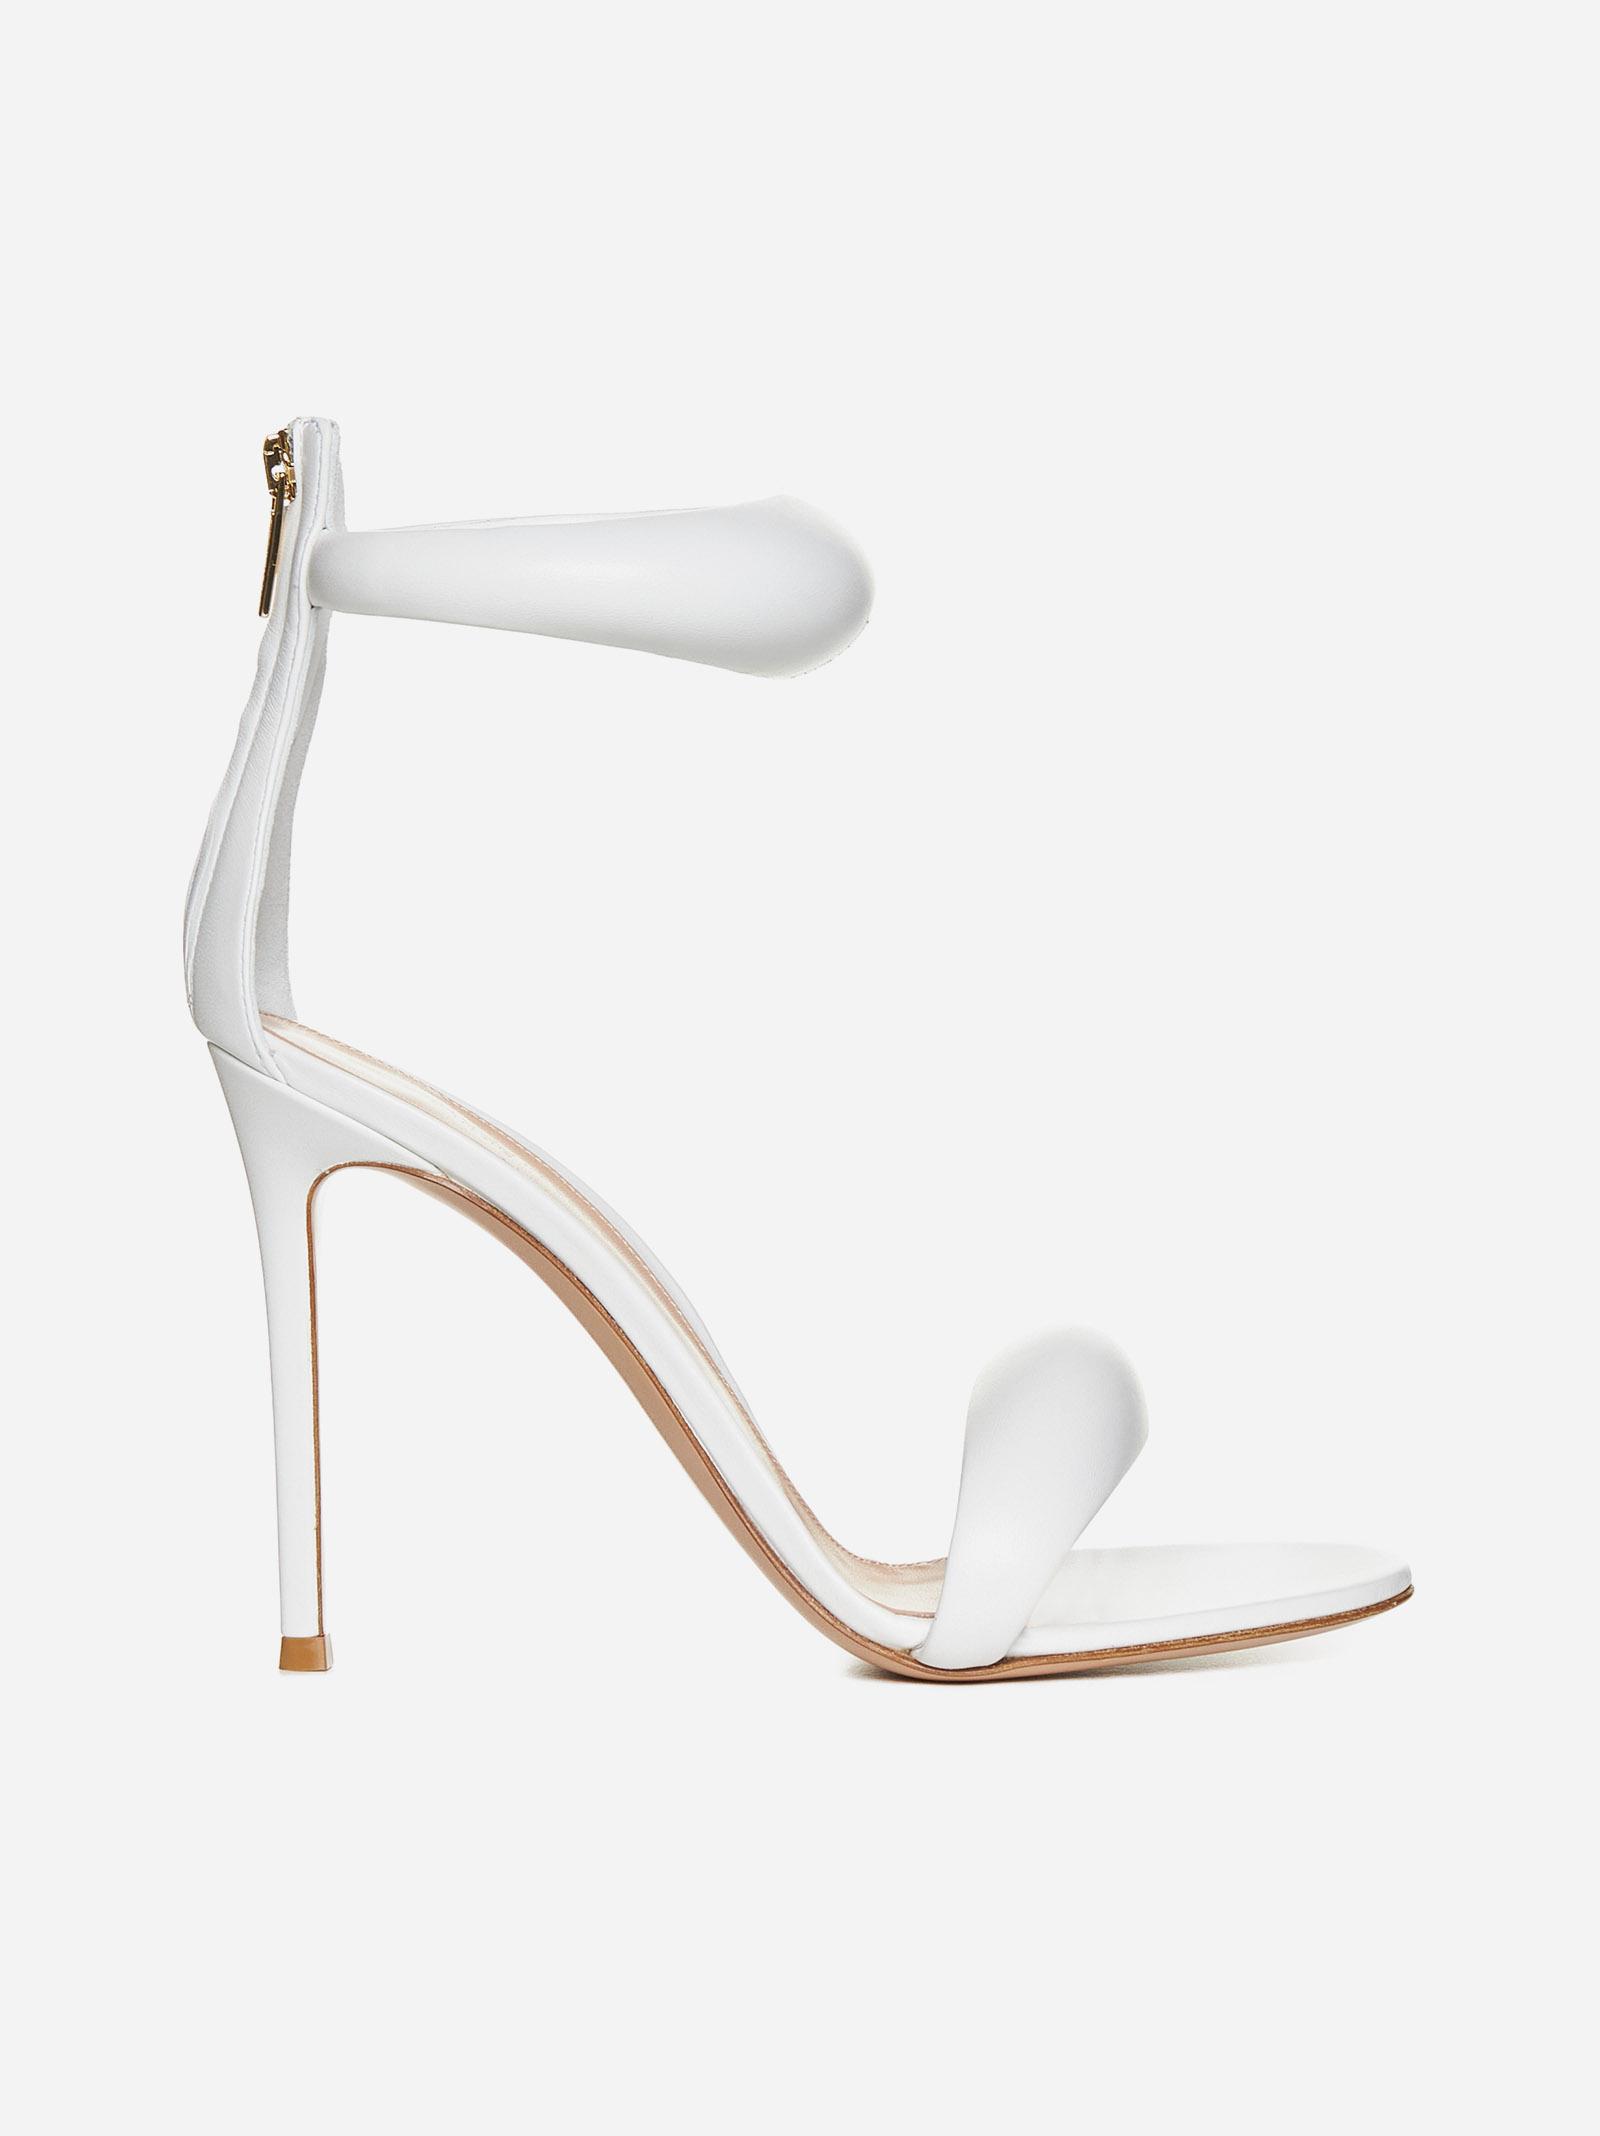 Gianvito Rossi Bijoux Nappa Leather Sandals in White | Lyst